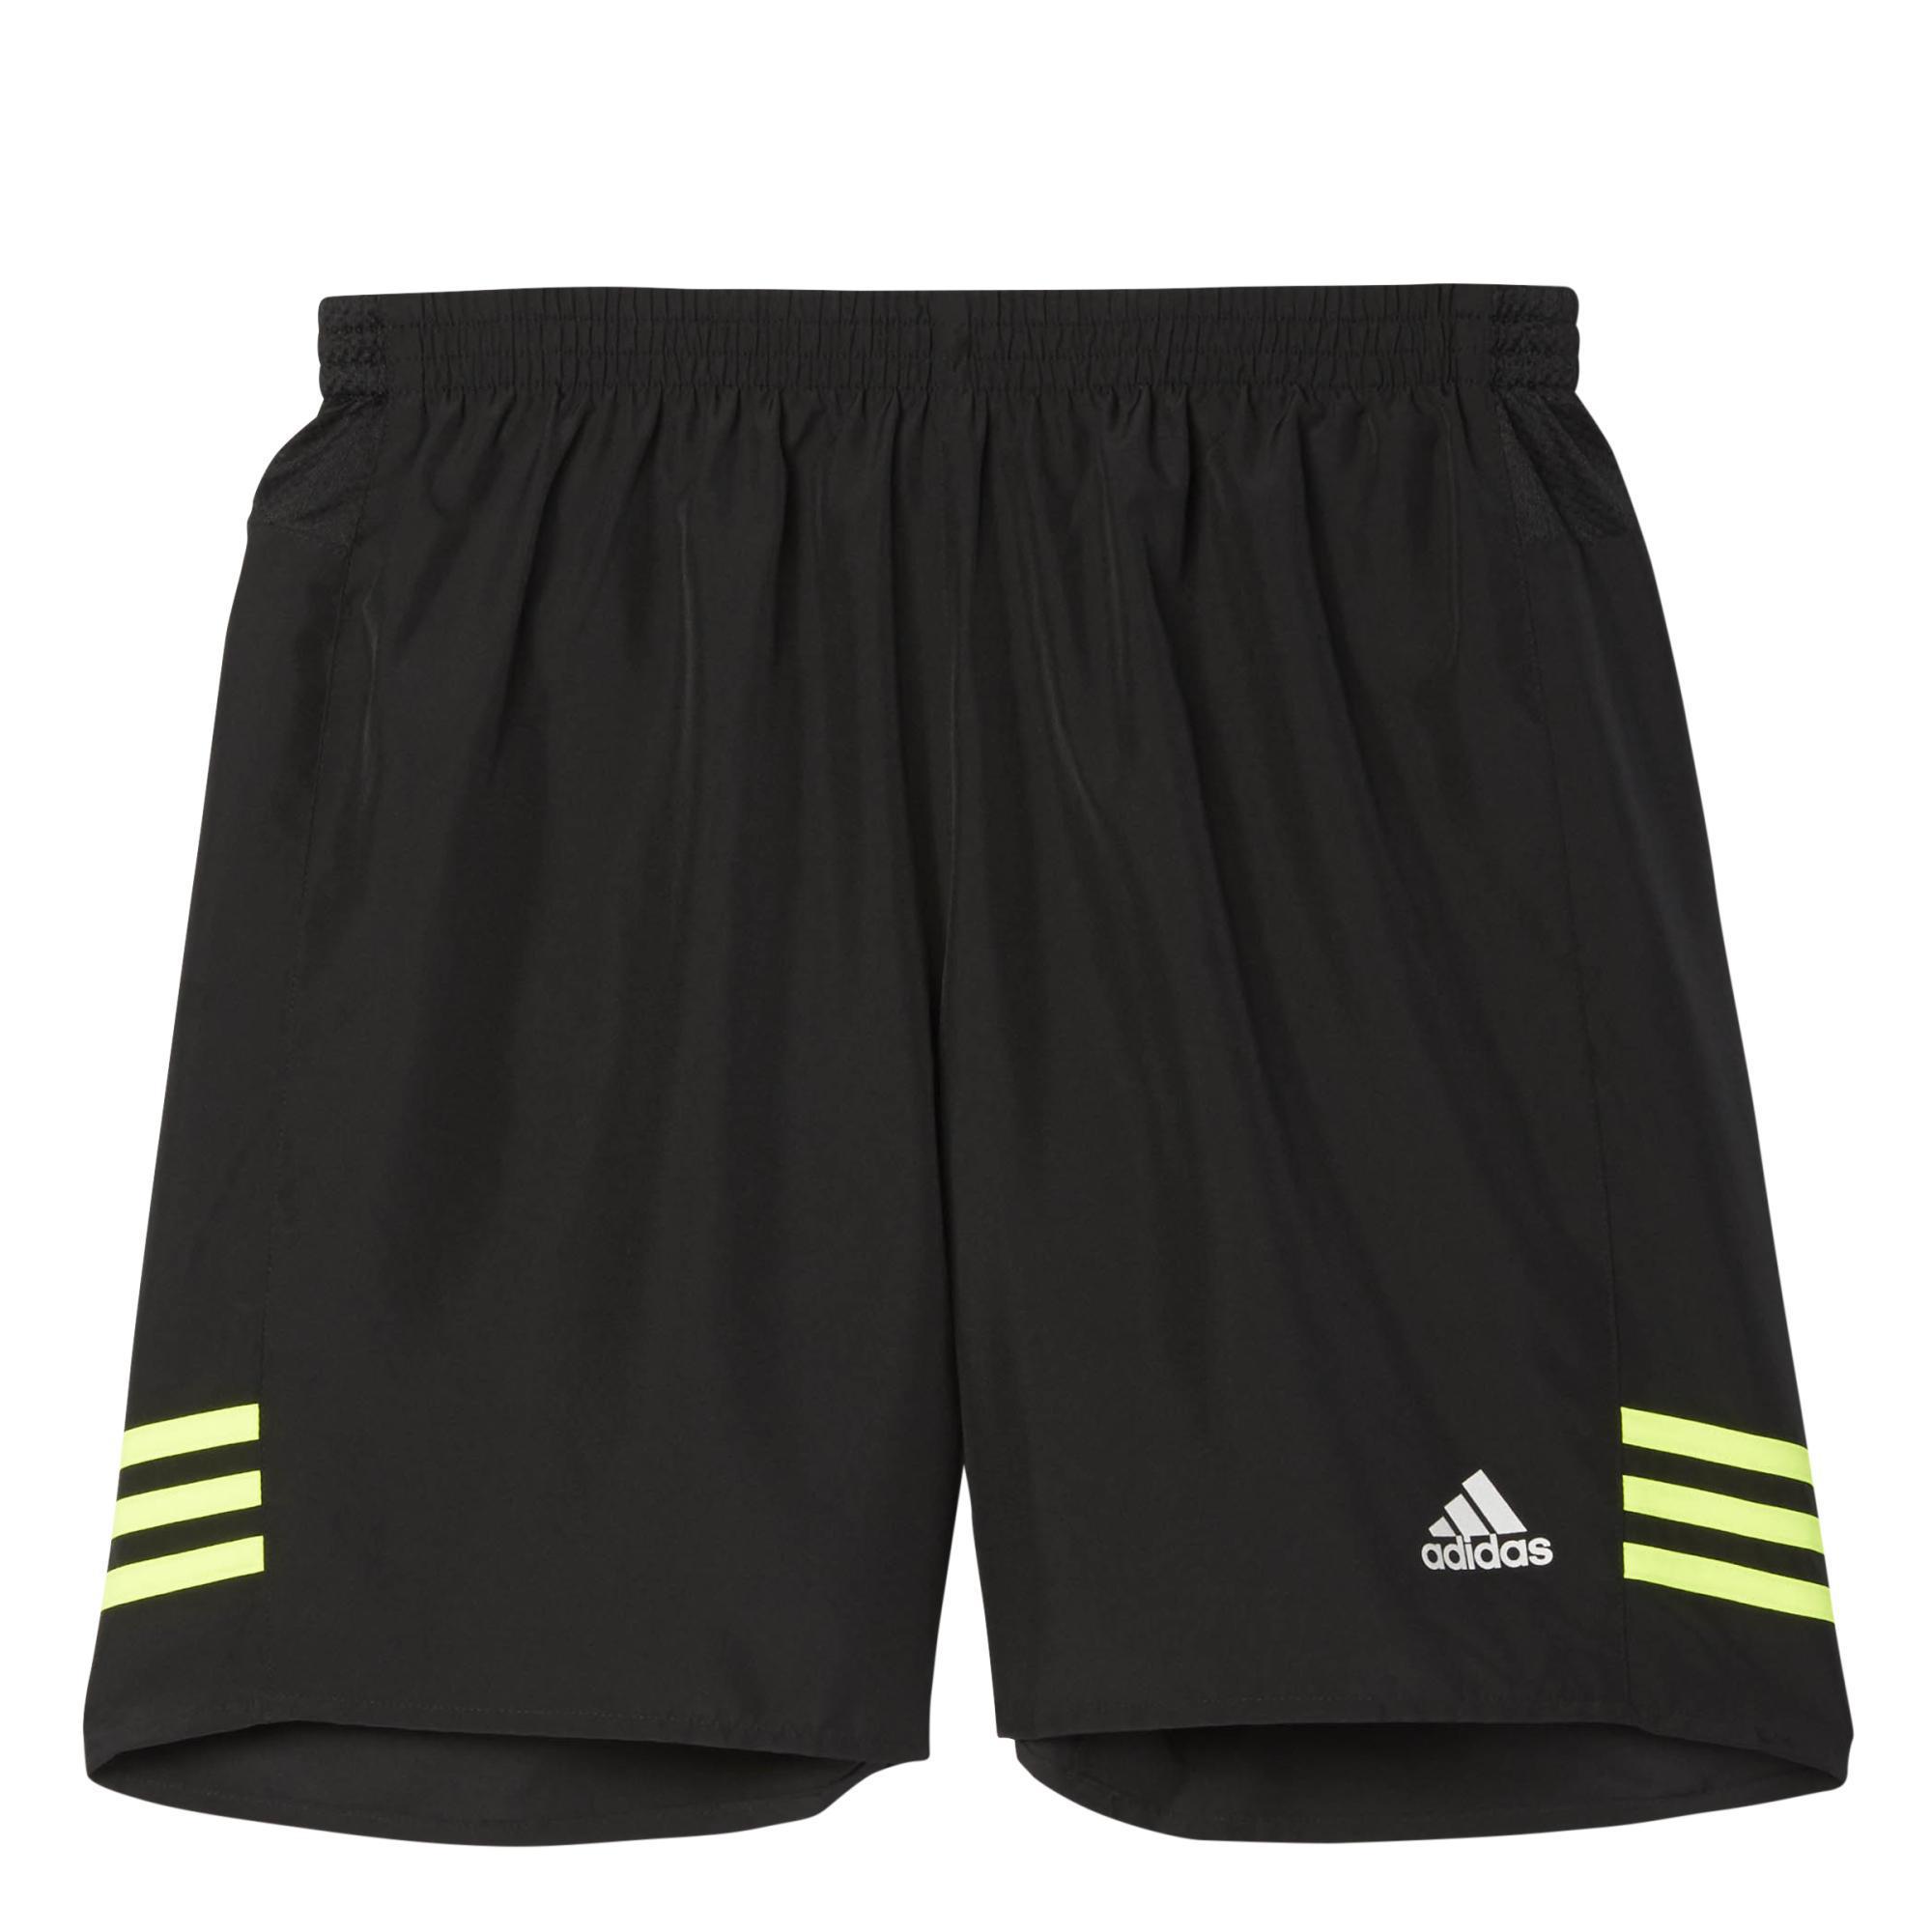 Adidas Mens Response 7-Inch Shorts Black/Yellow - Tennisnuts.com